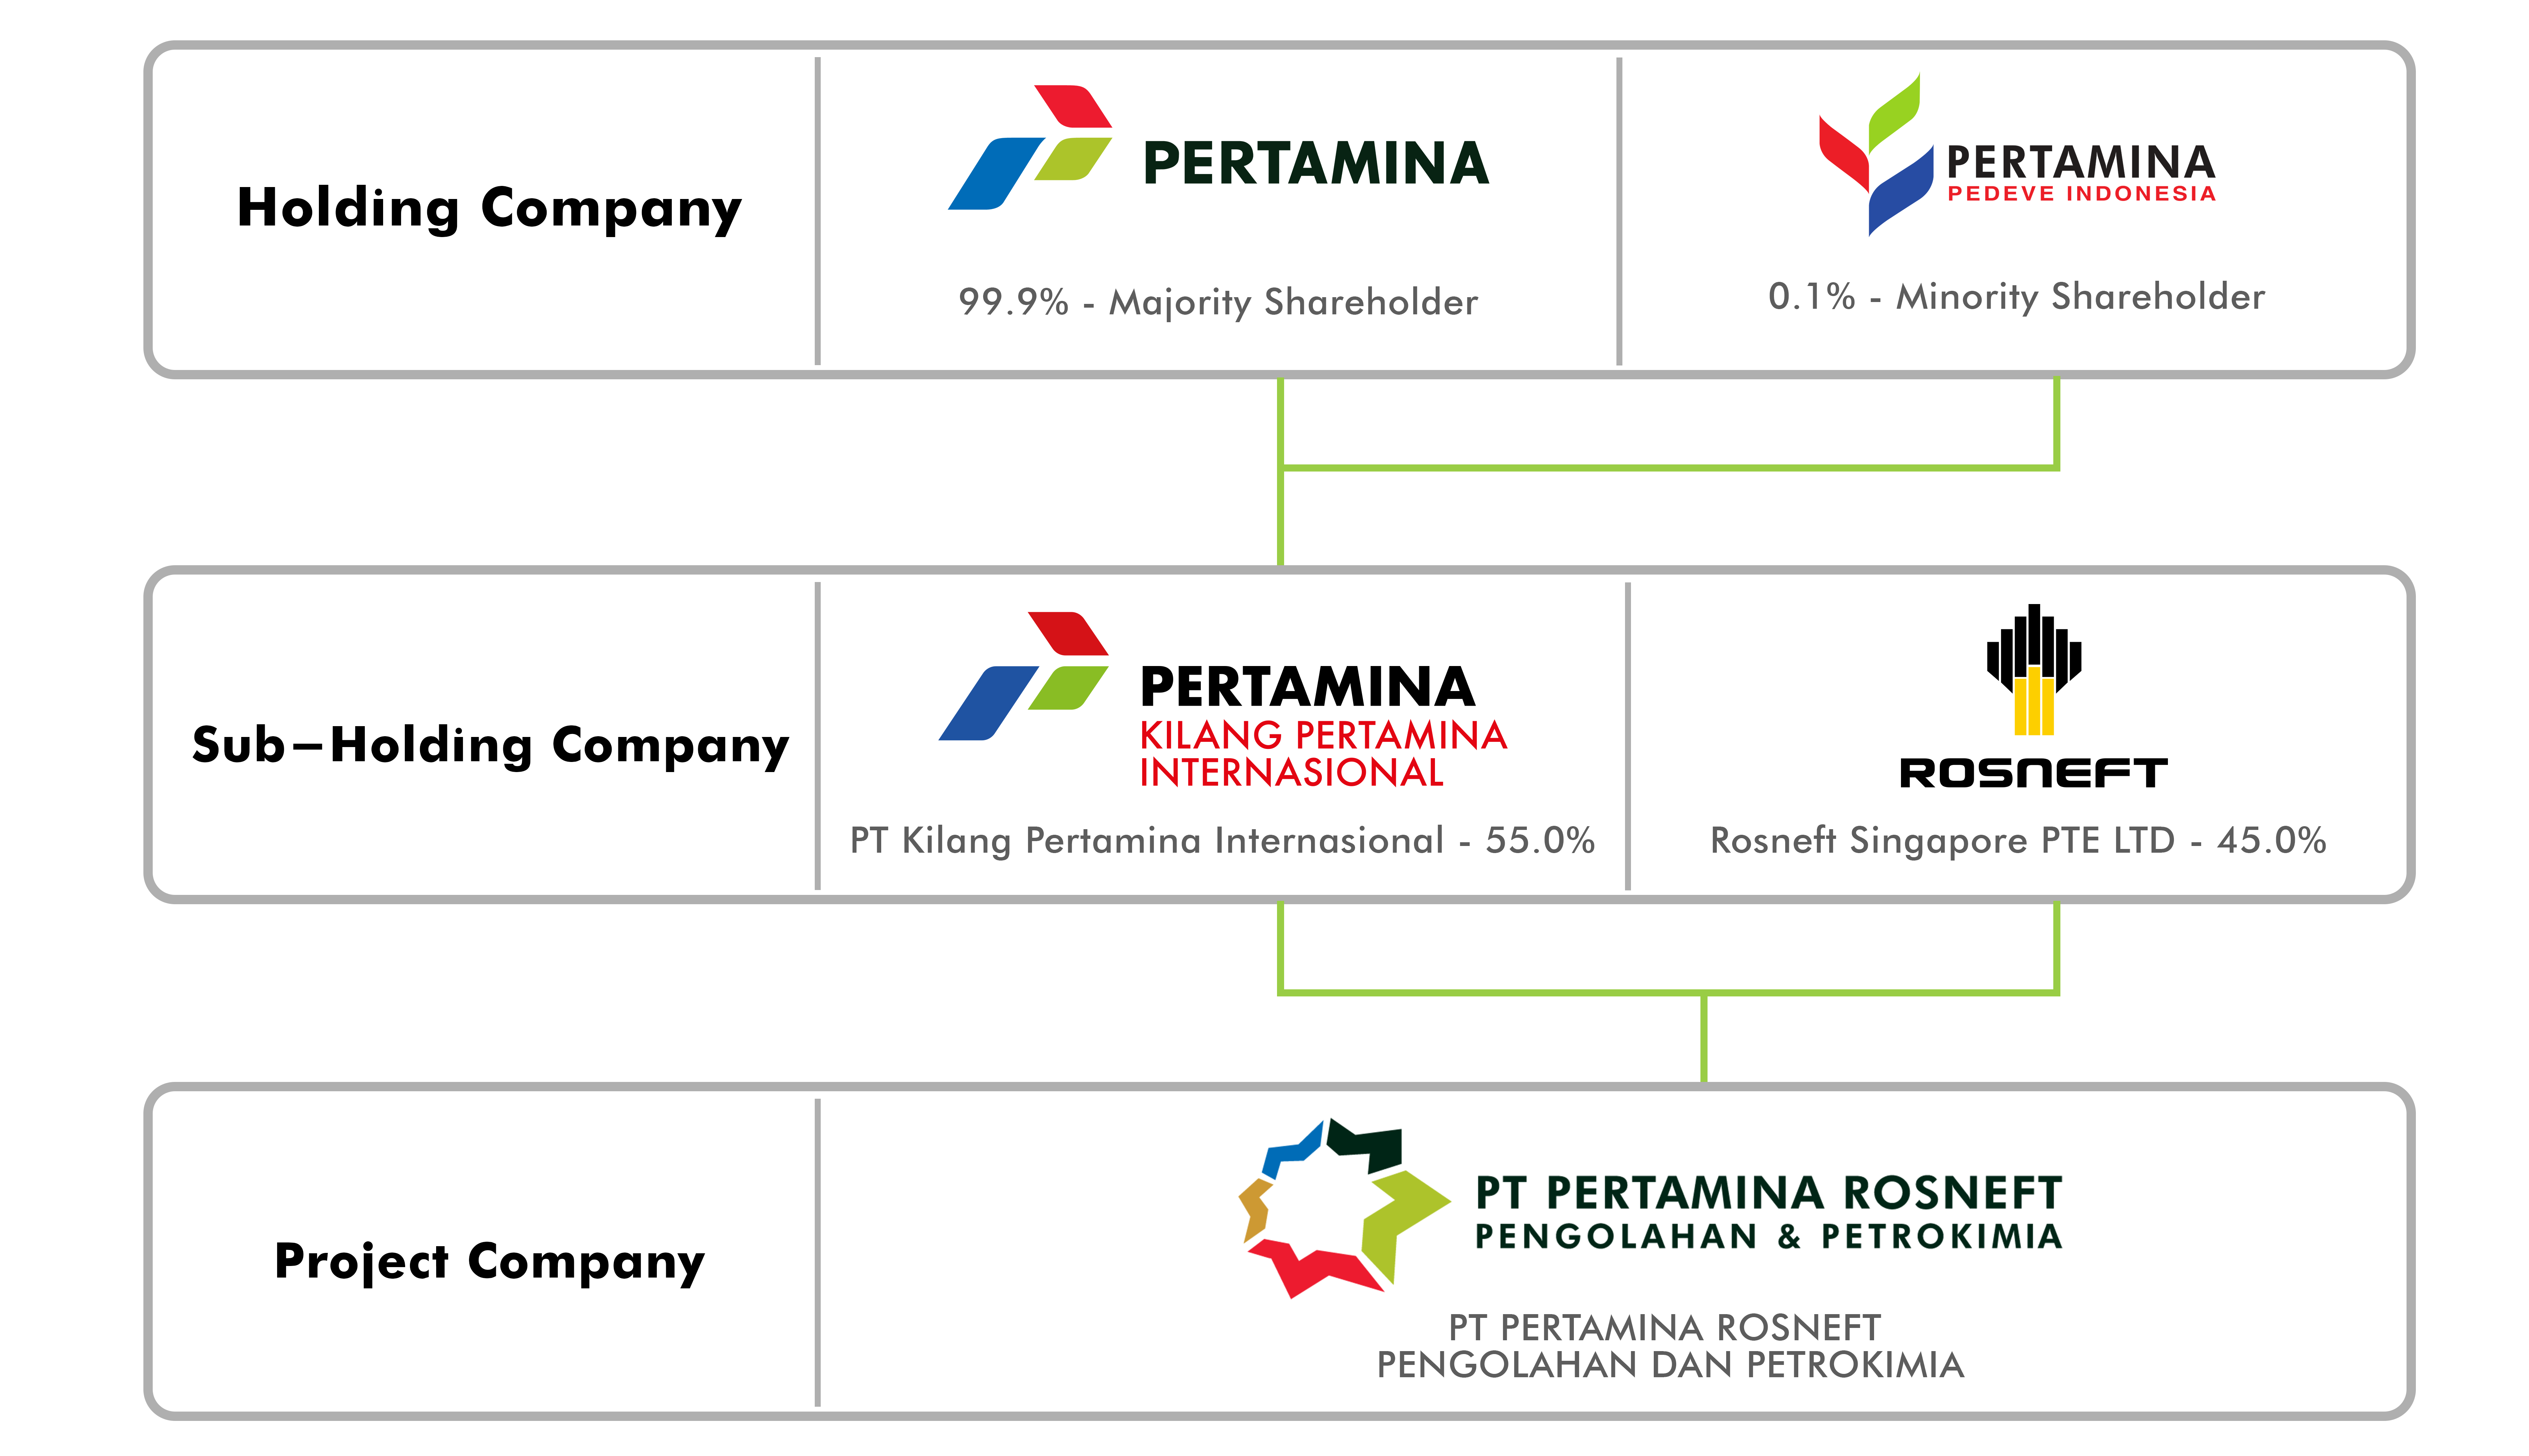 Pemegang Saham/Shareholders